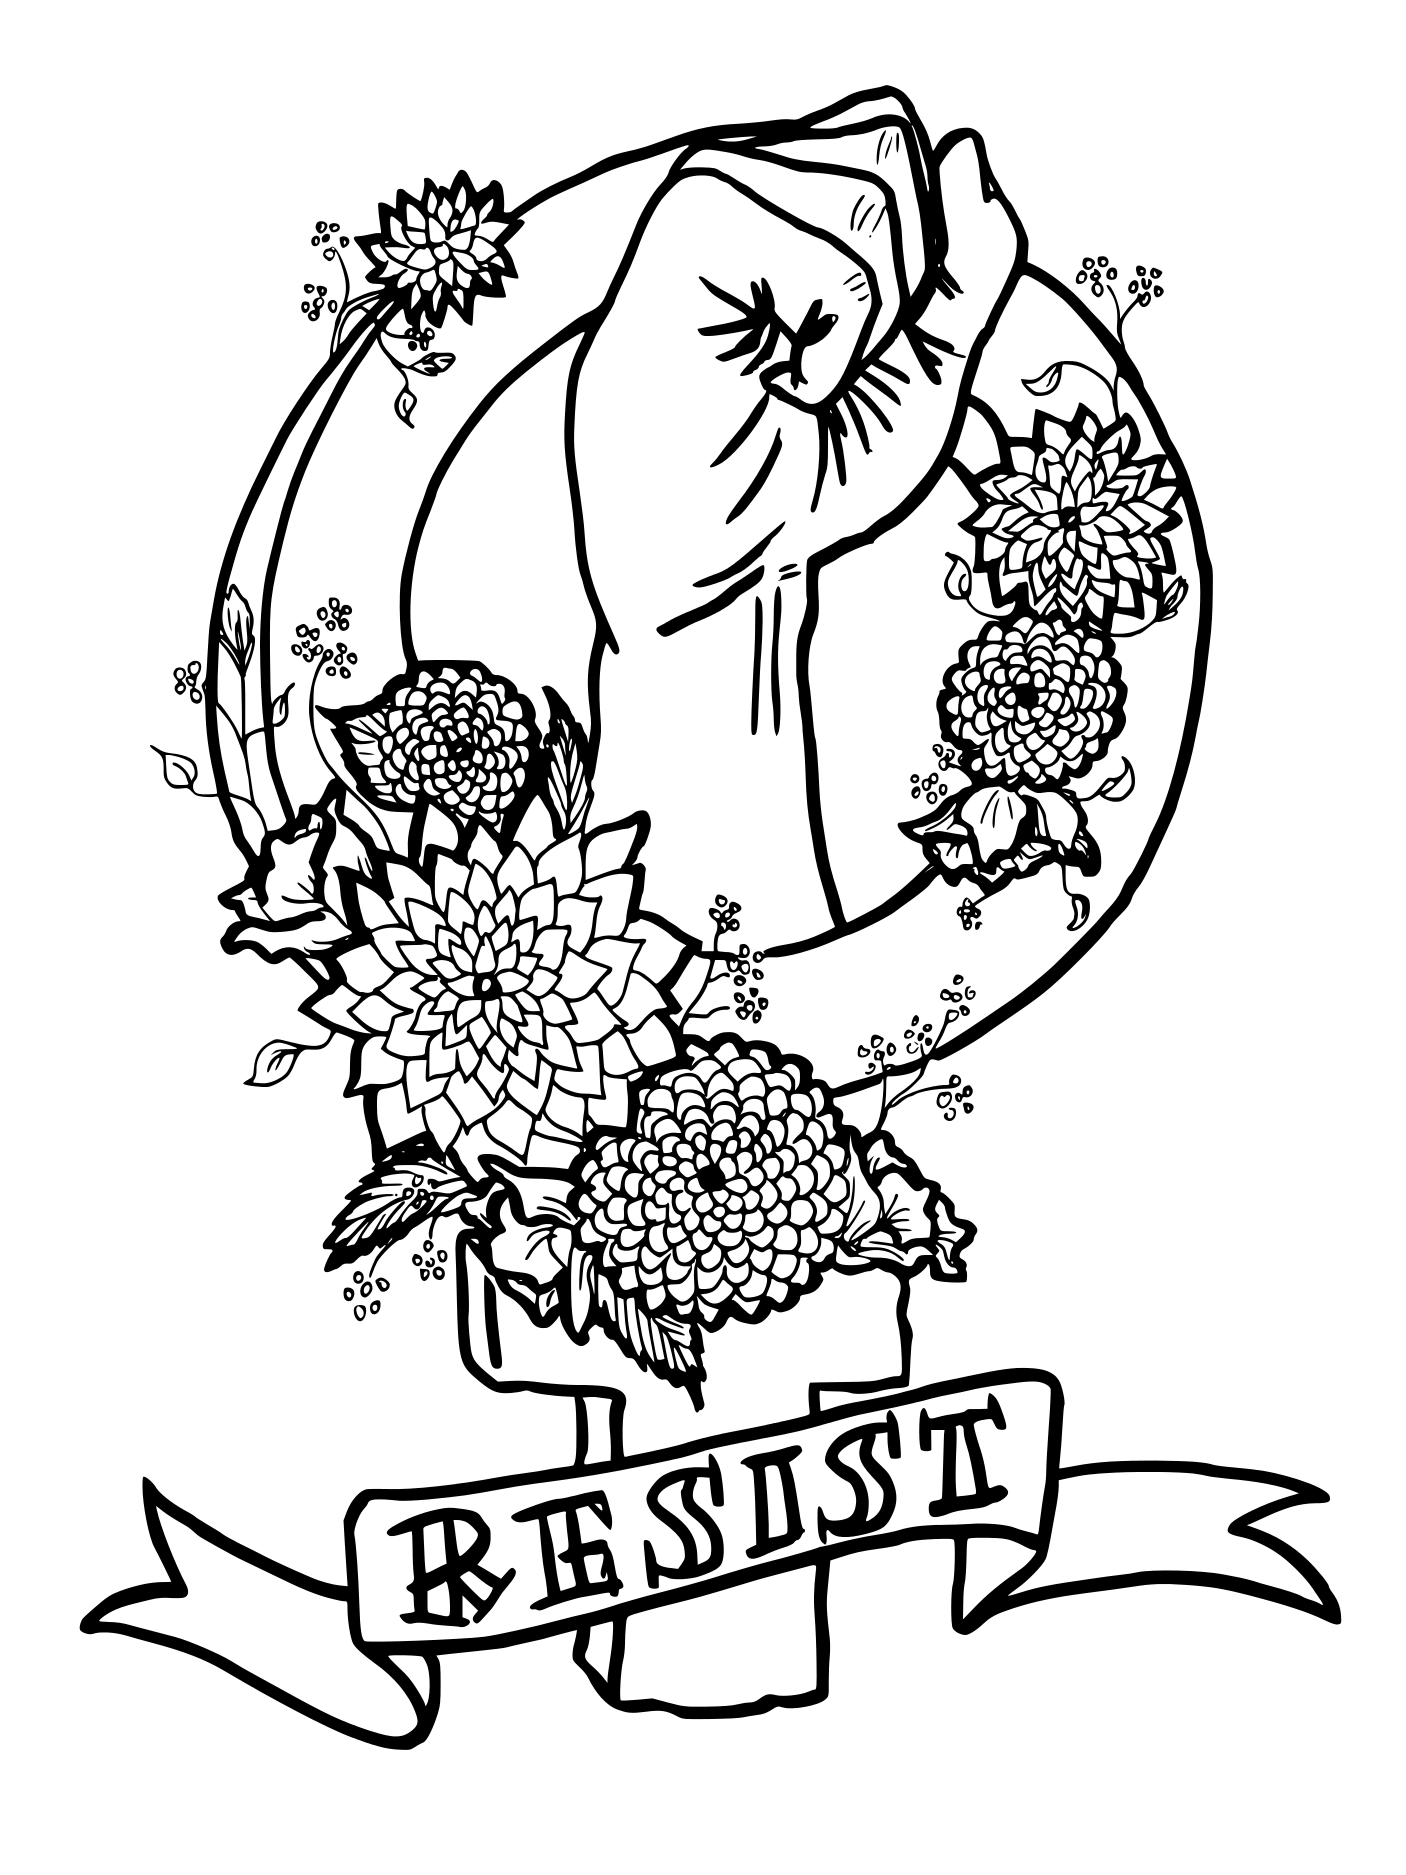 Resist Girl Power By Kat Kissick